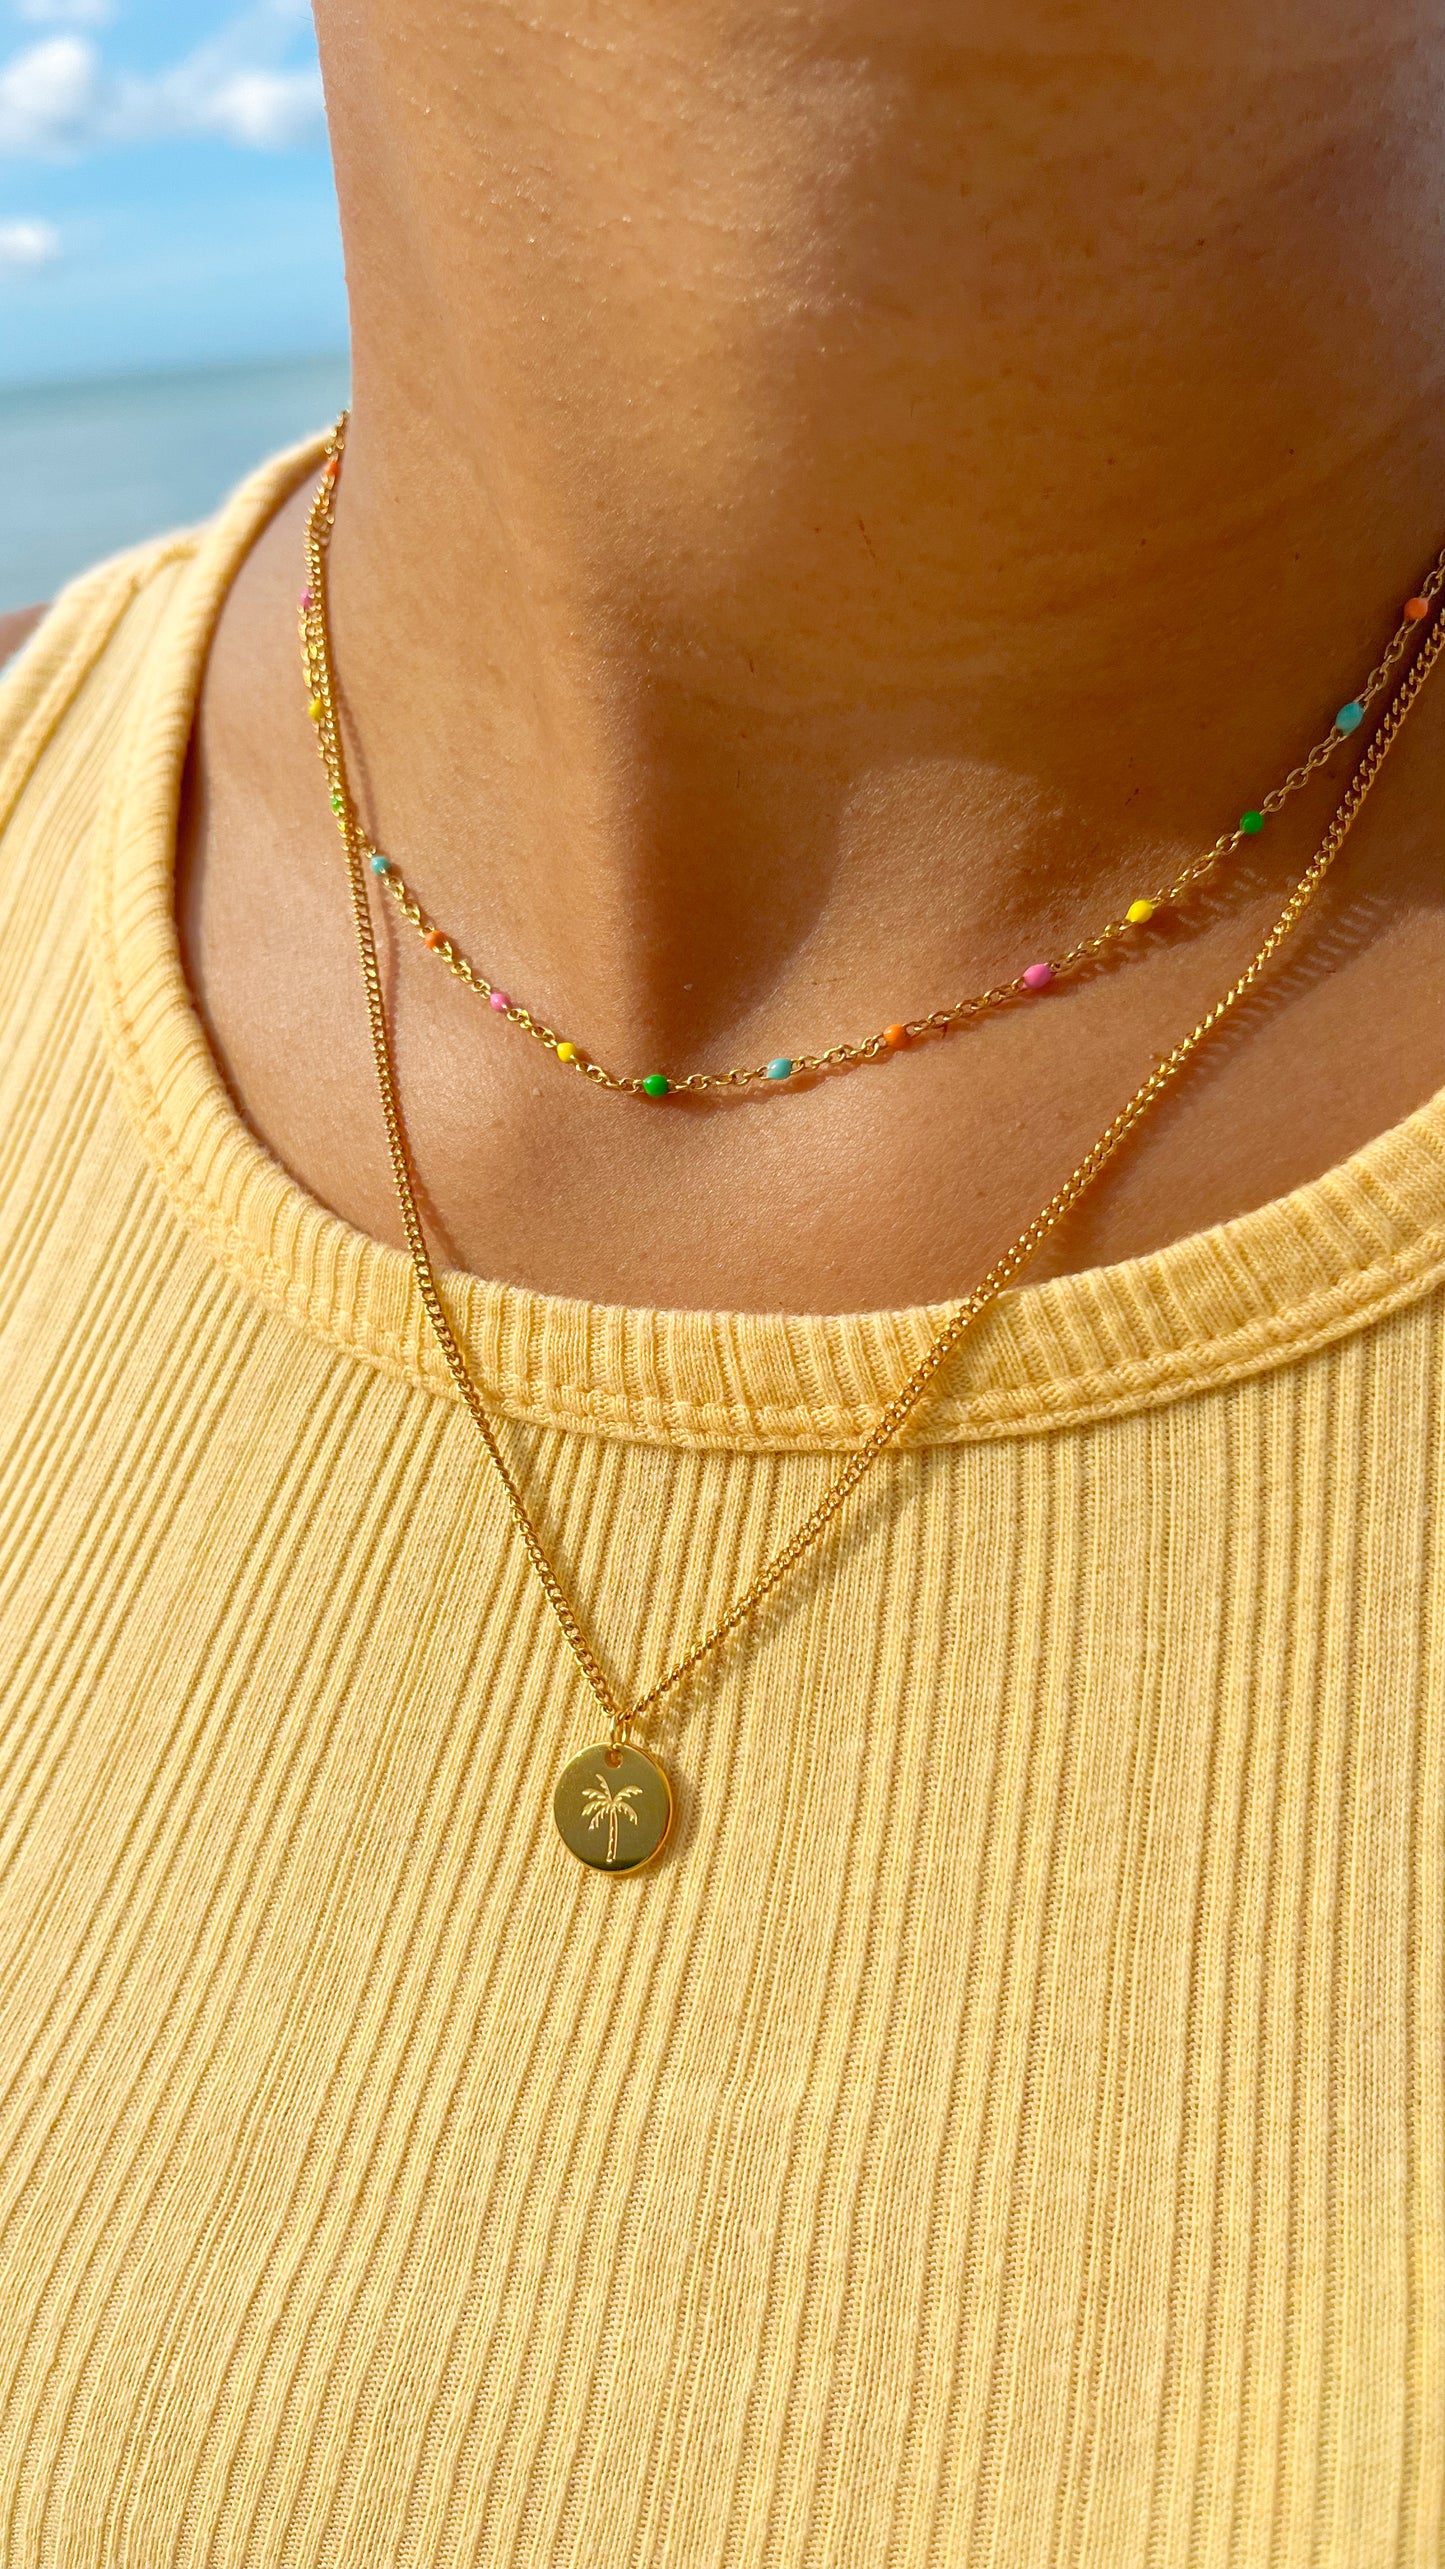 Palmtree golden necklace